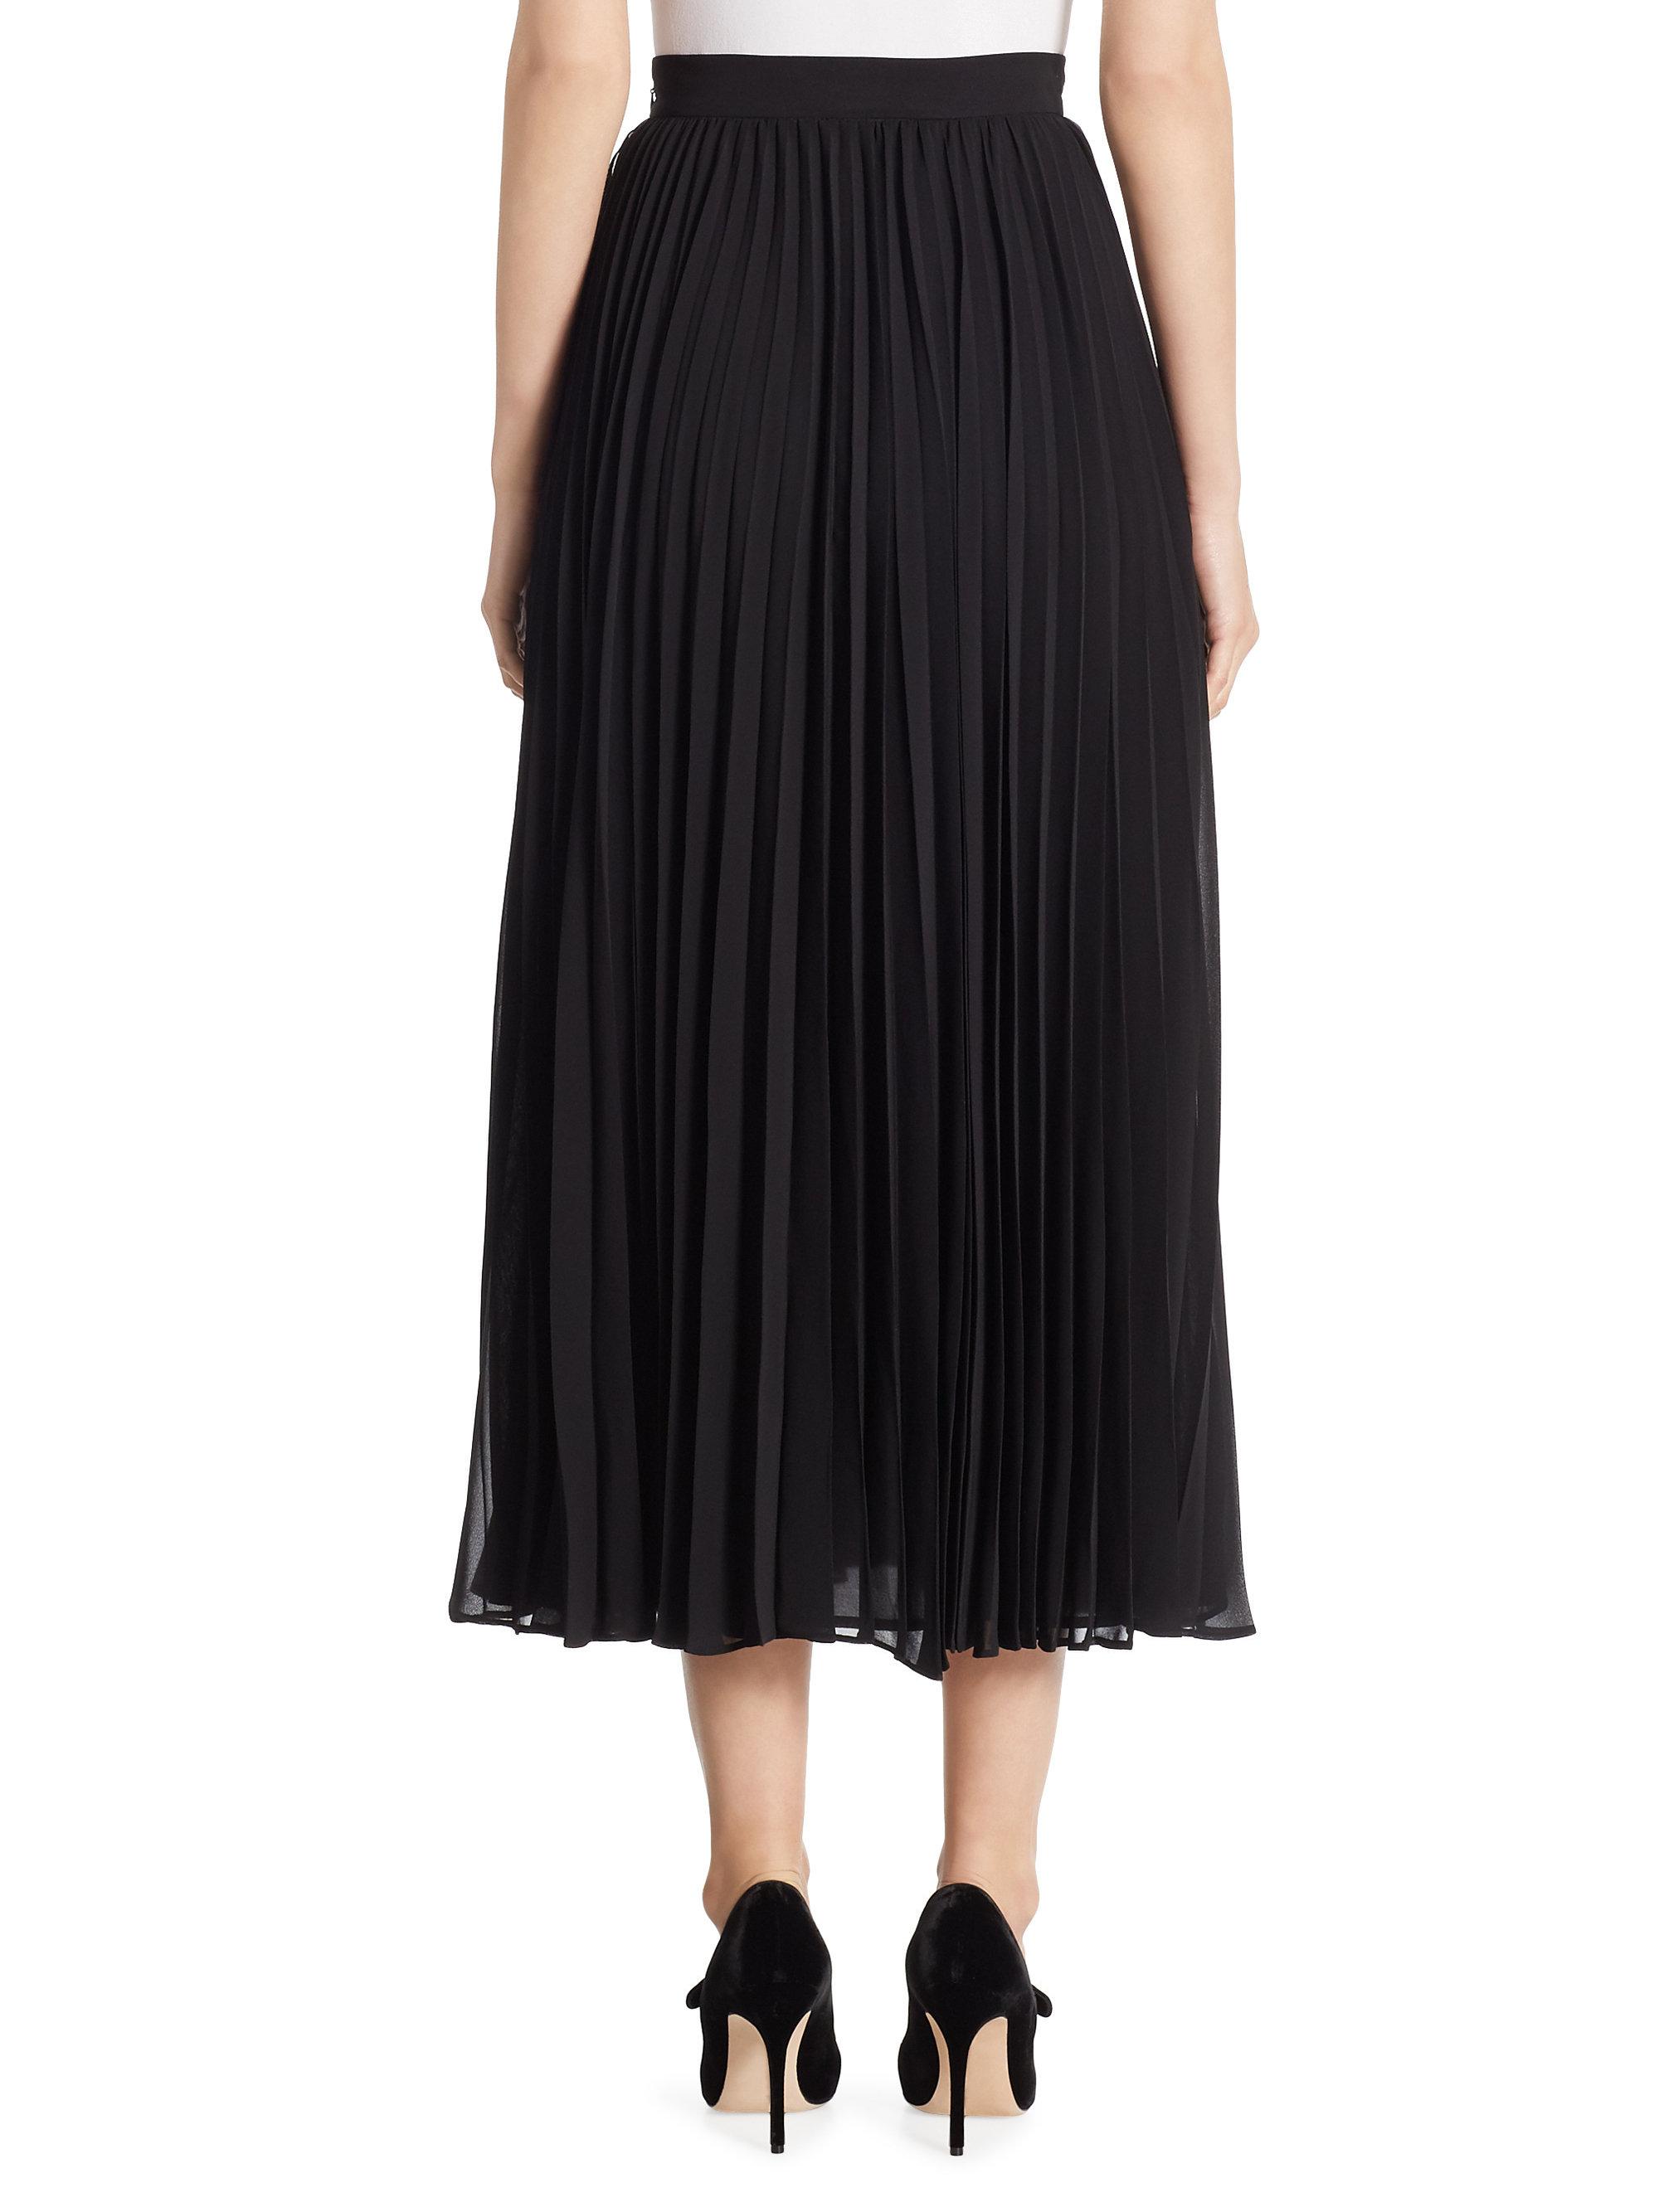 Lyst - St. John Pleated Midi Skirt in Black